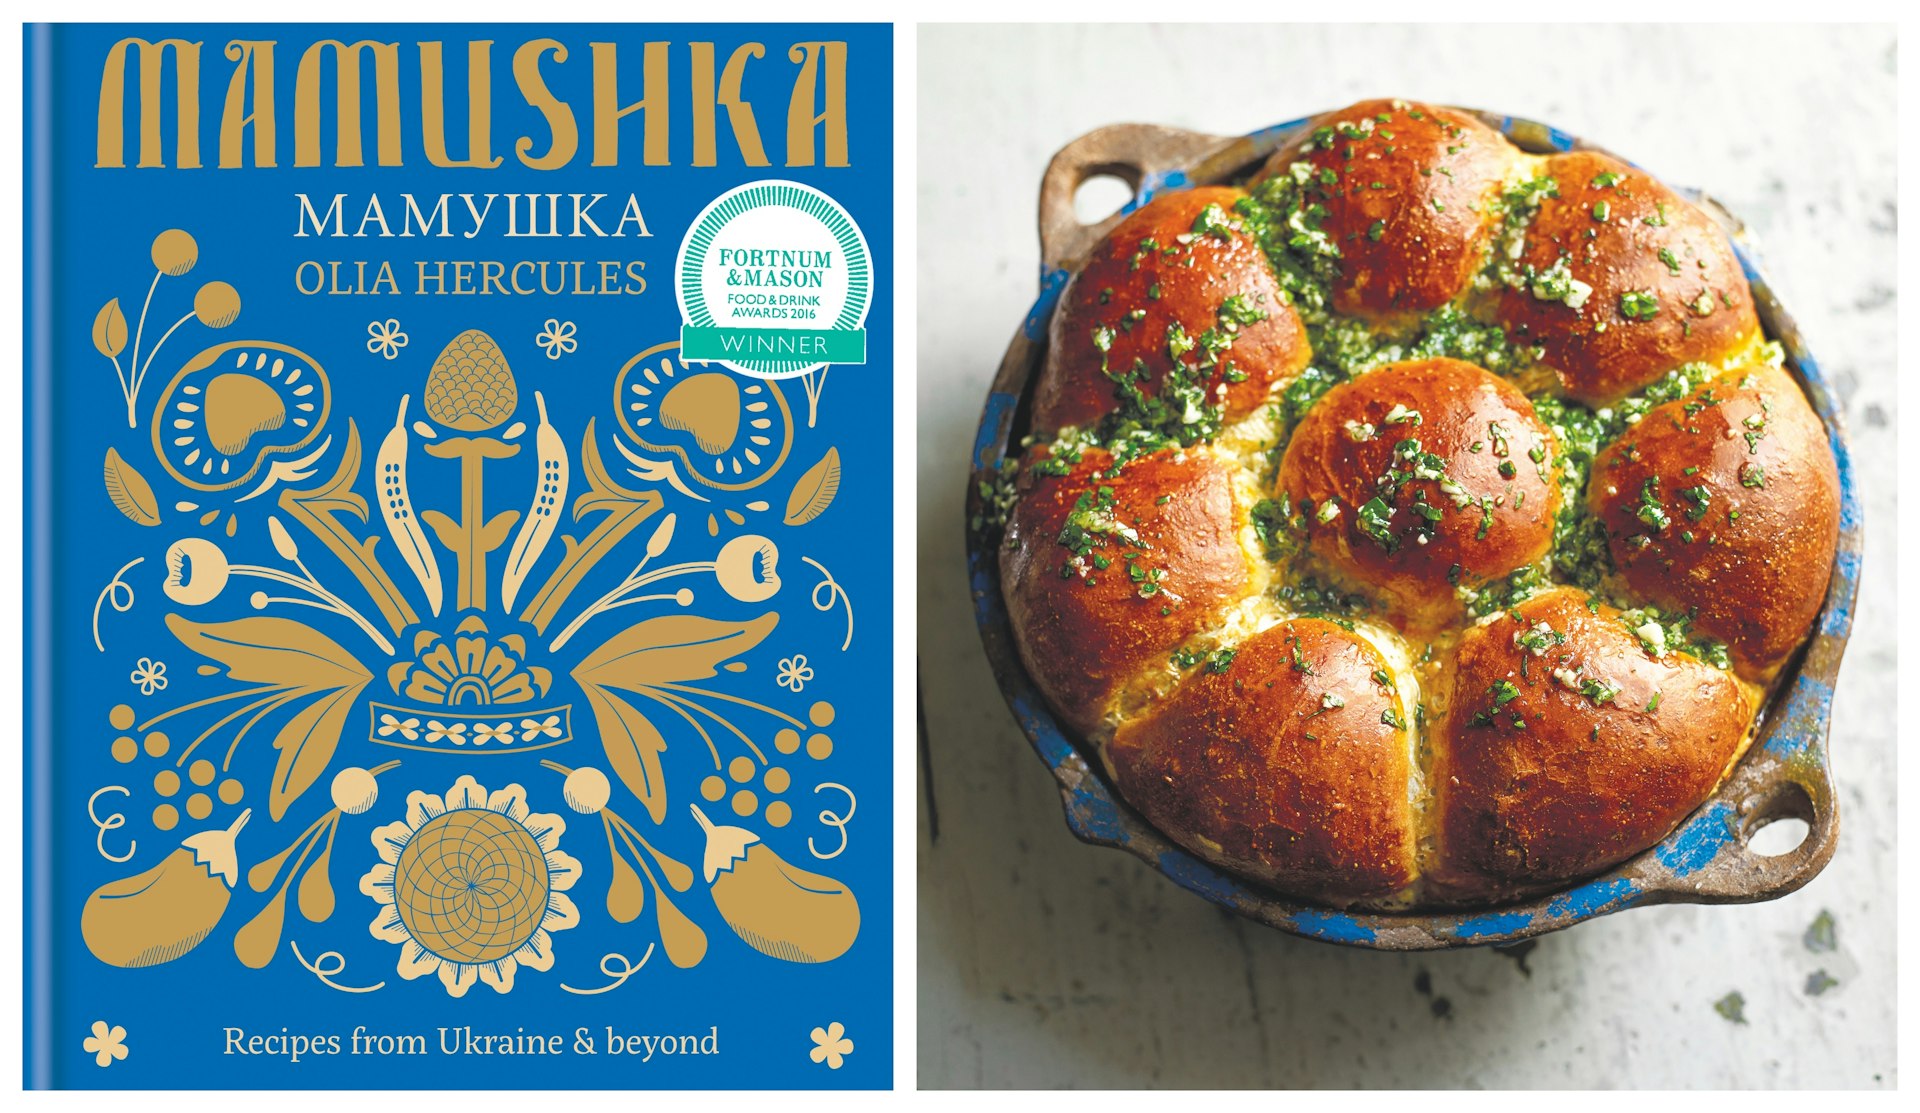 On the left the Mamushka cookbook, on the right cooked pampushki